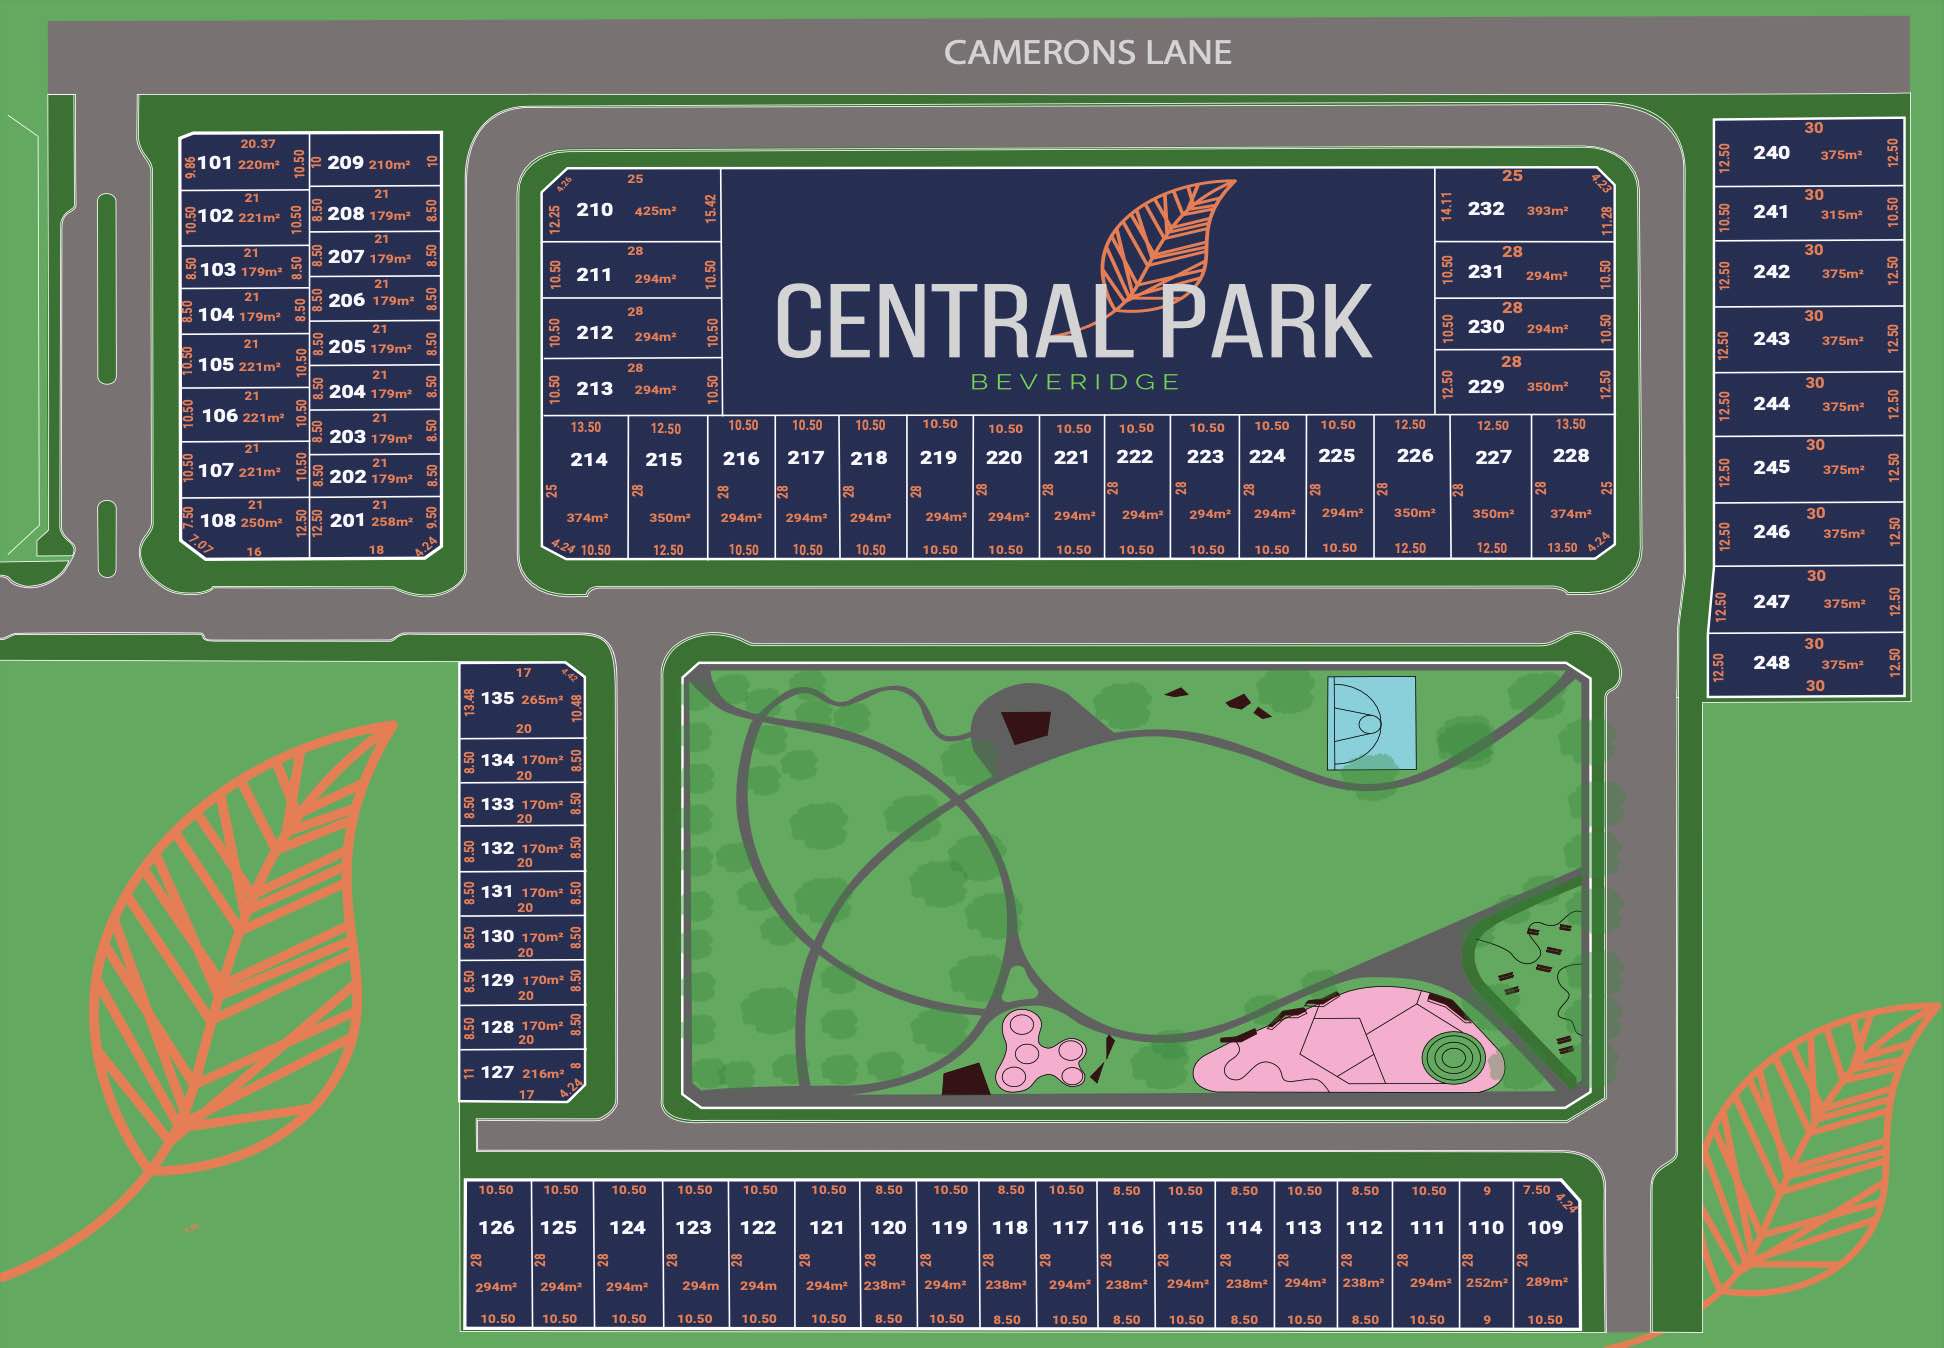 Central Park Estate - Beveridge Masterplan